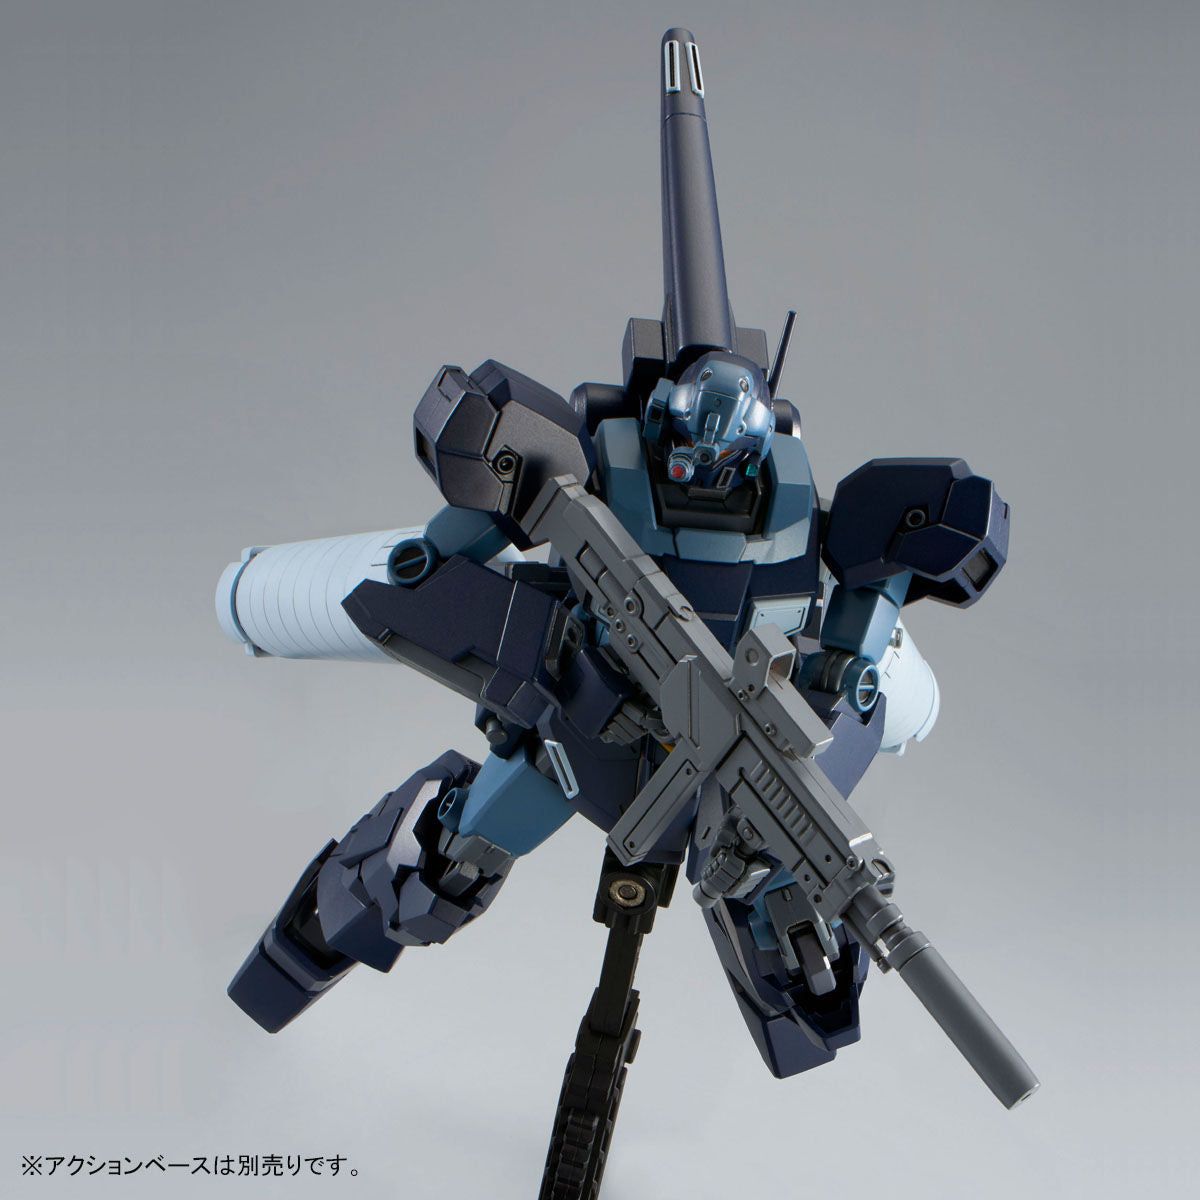 P-Bandai HG 1/144 Jesta Schezar team specification A group equipment Mobile Suit Gundam NT